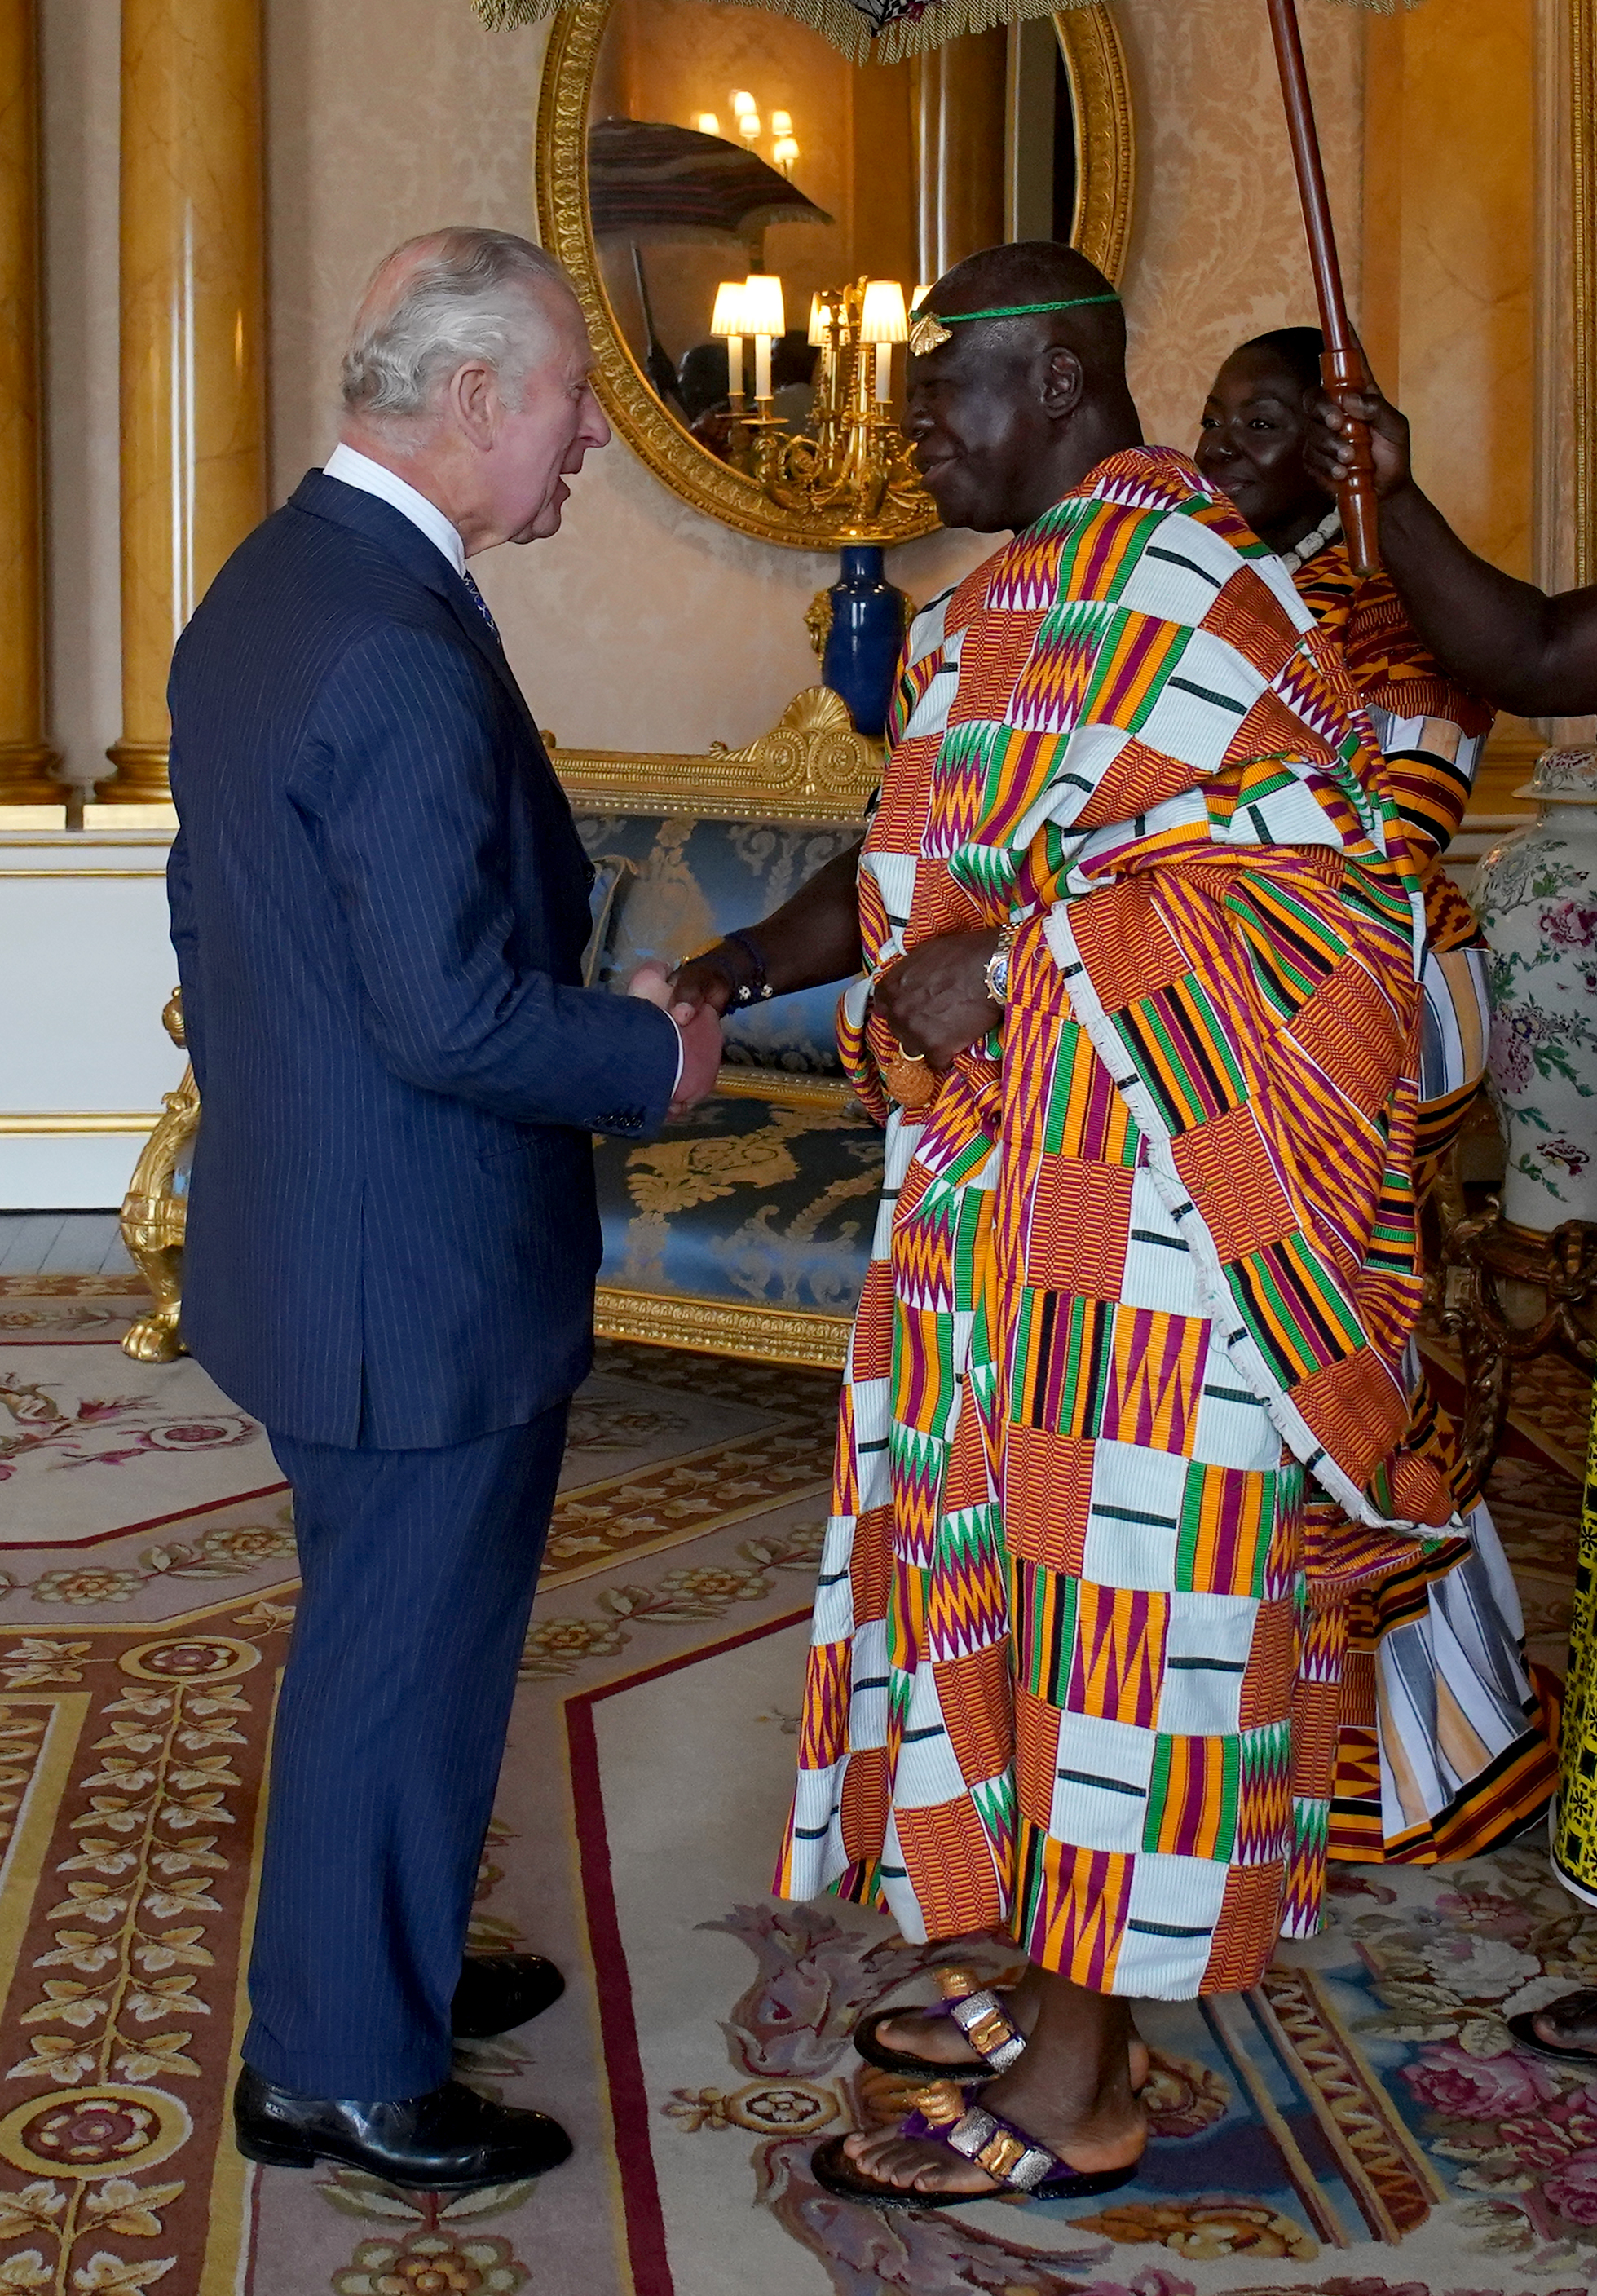 Asantehene Otumfuo Osei Tutu II and his wife Lady Julia meet King Charles III at Buckingham Palace.